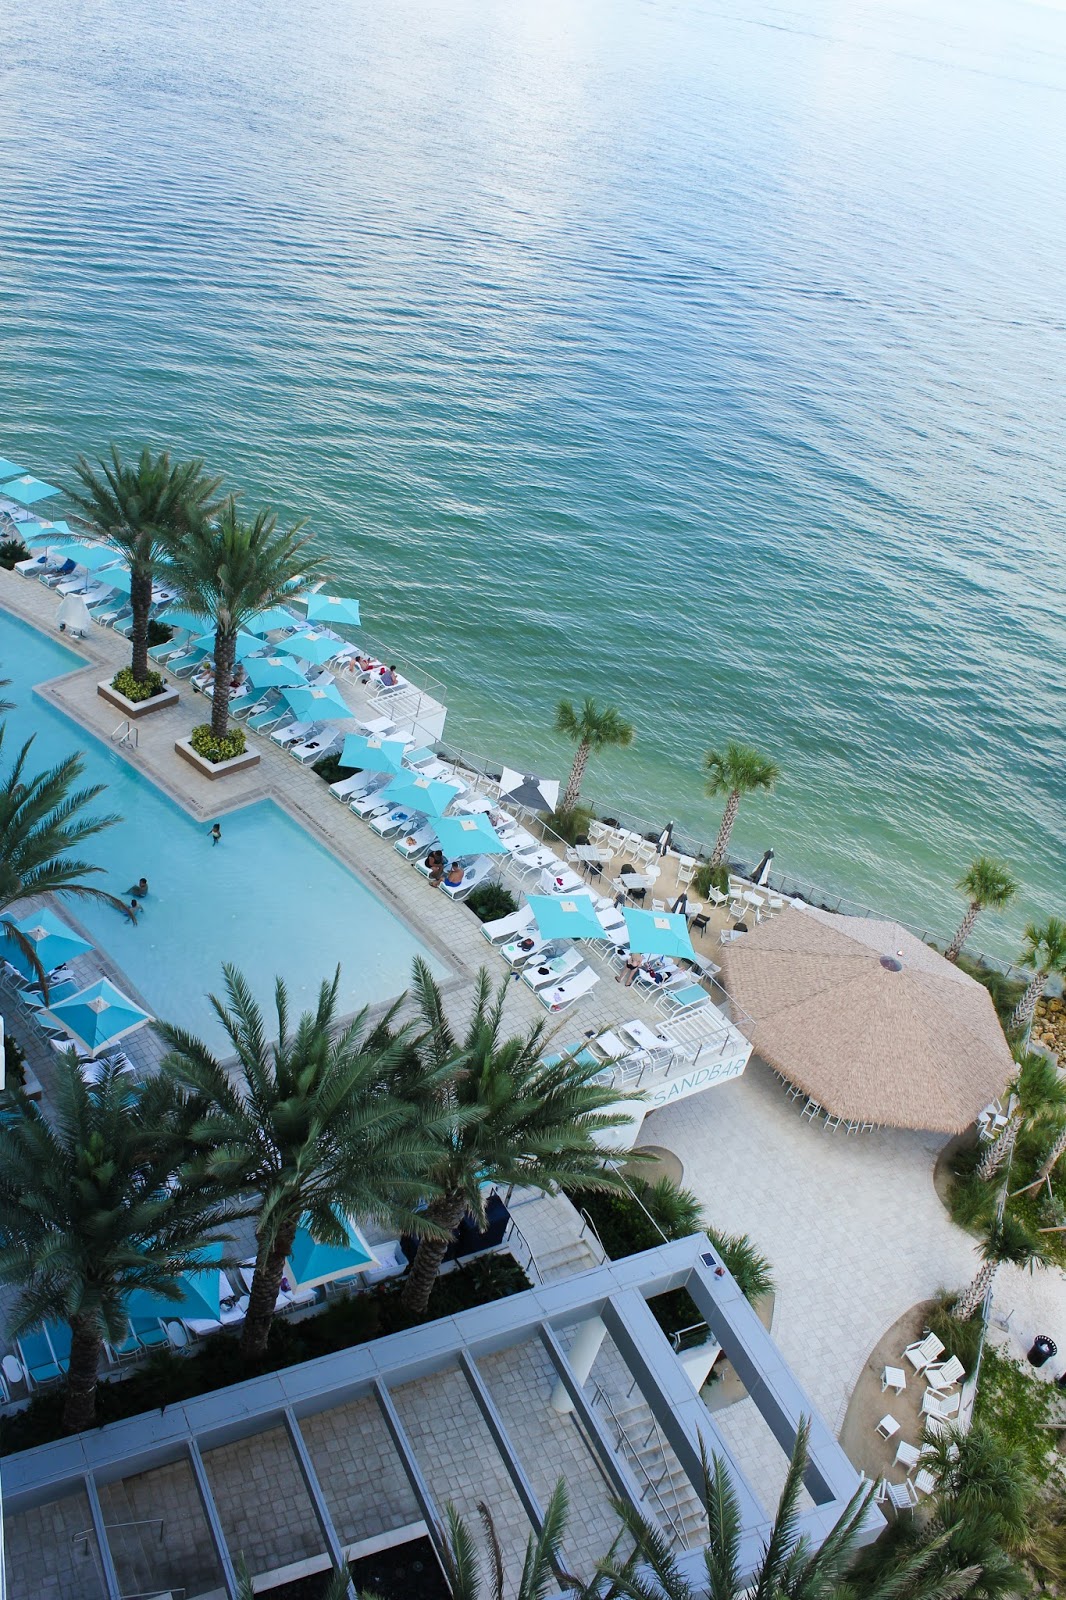 Opal Sands Resort, Clearwater Beach Florida, Neutral2Neon